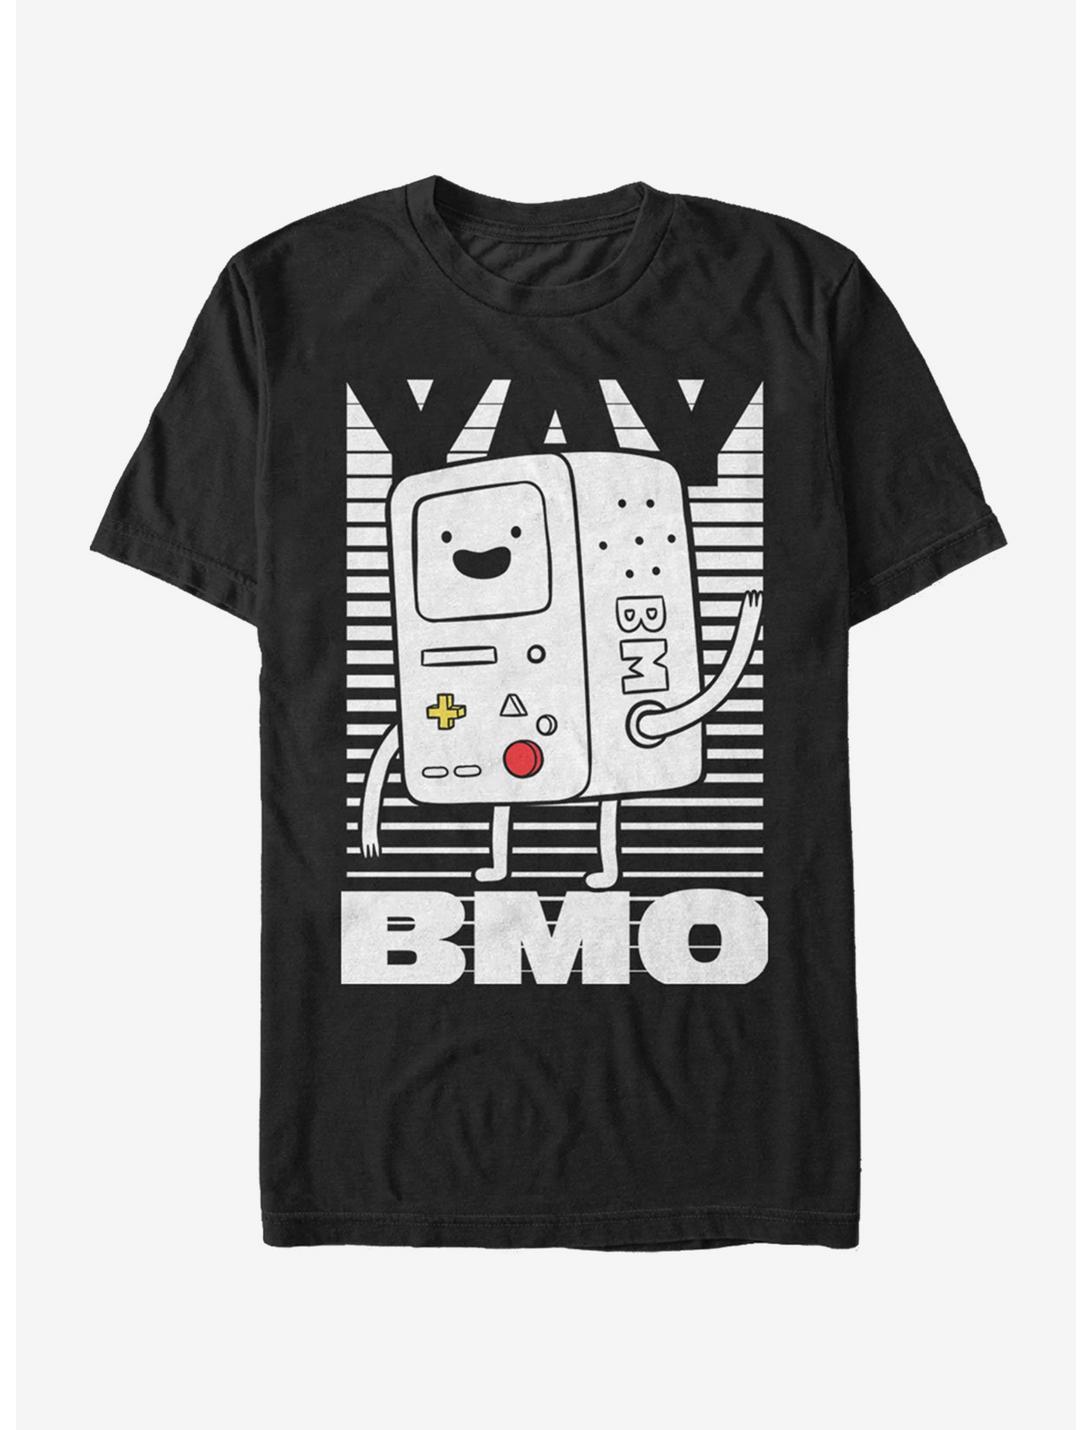 Cartoon Network Adventure Time Yay BMO T-Shirt, BLACK, hi-res